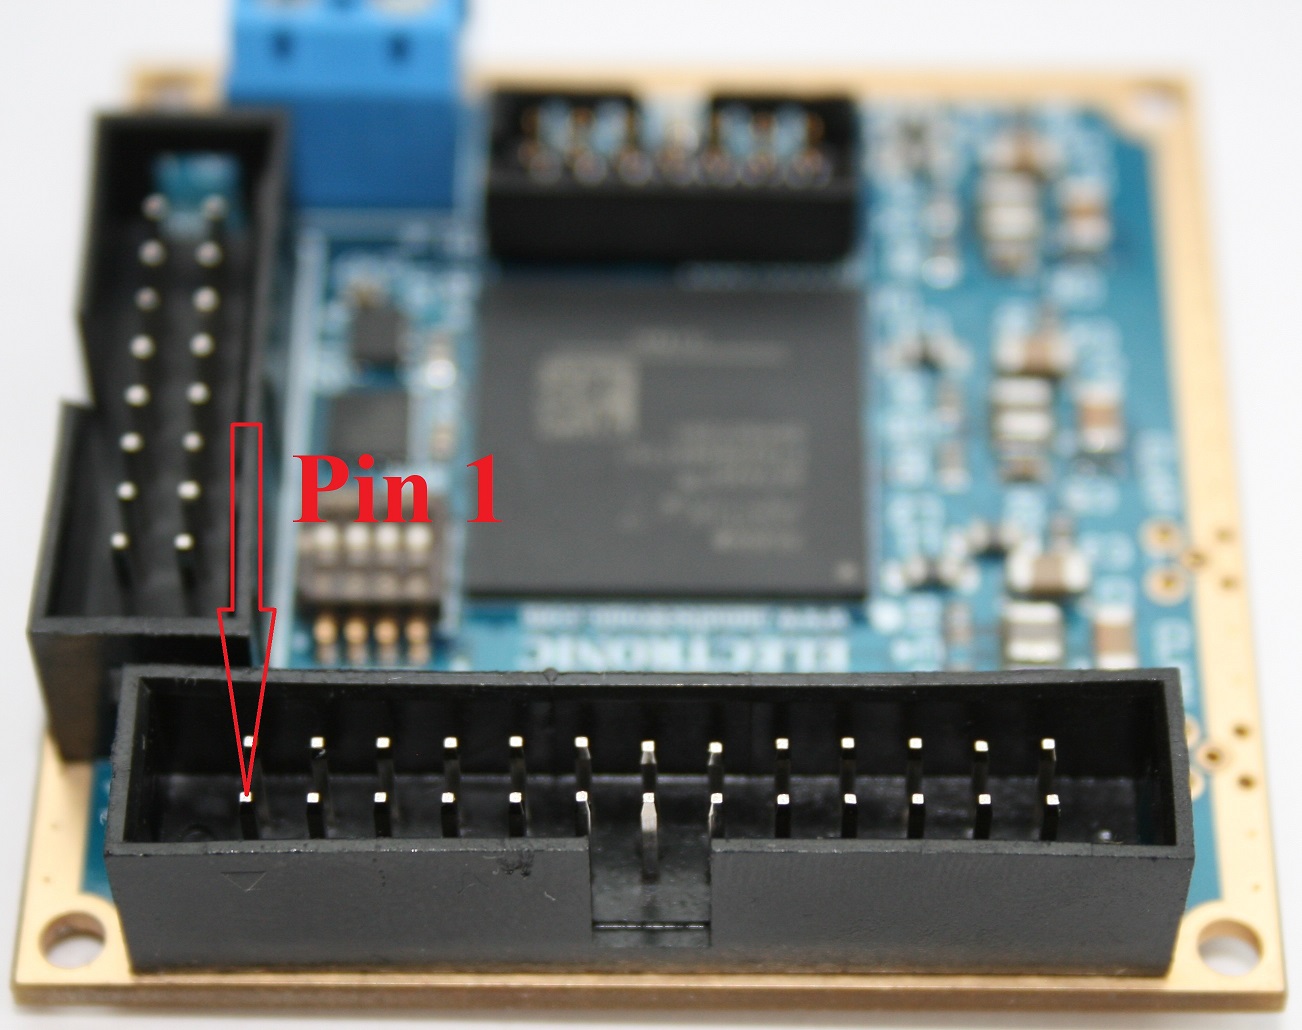 Tiny FPGA module, PT connector